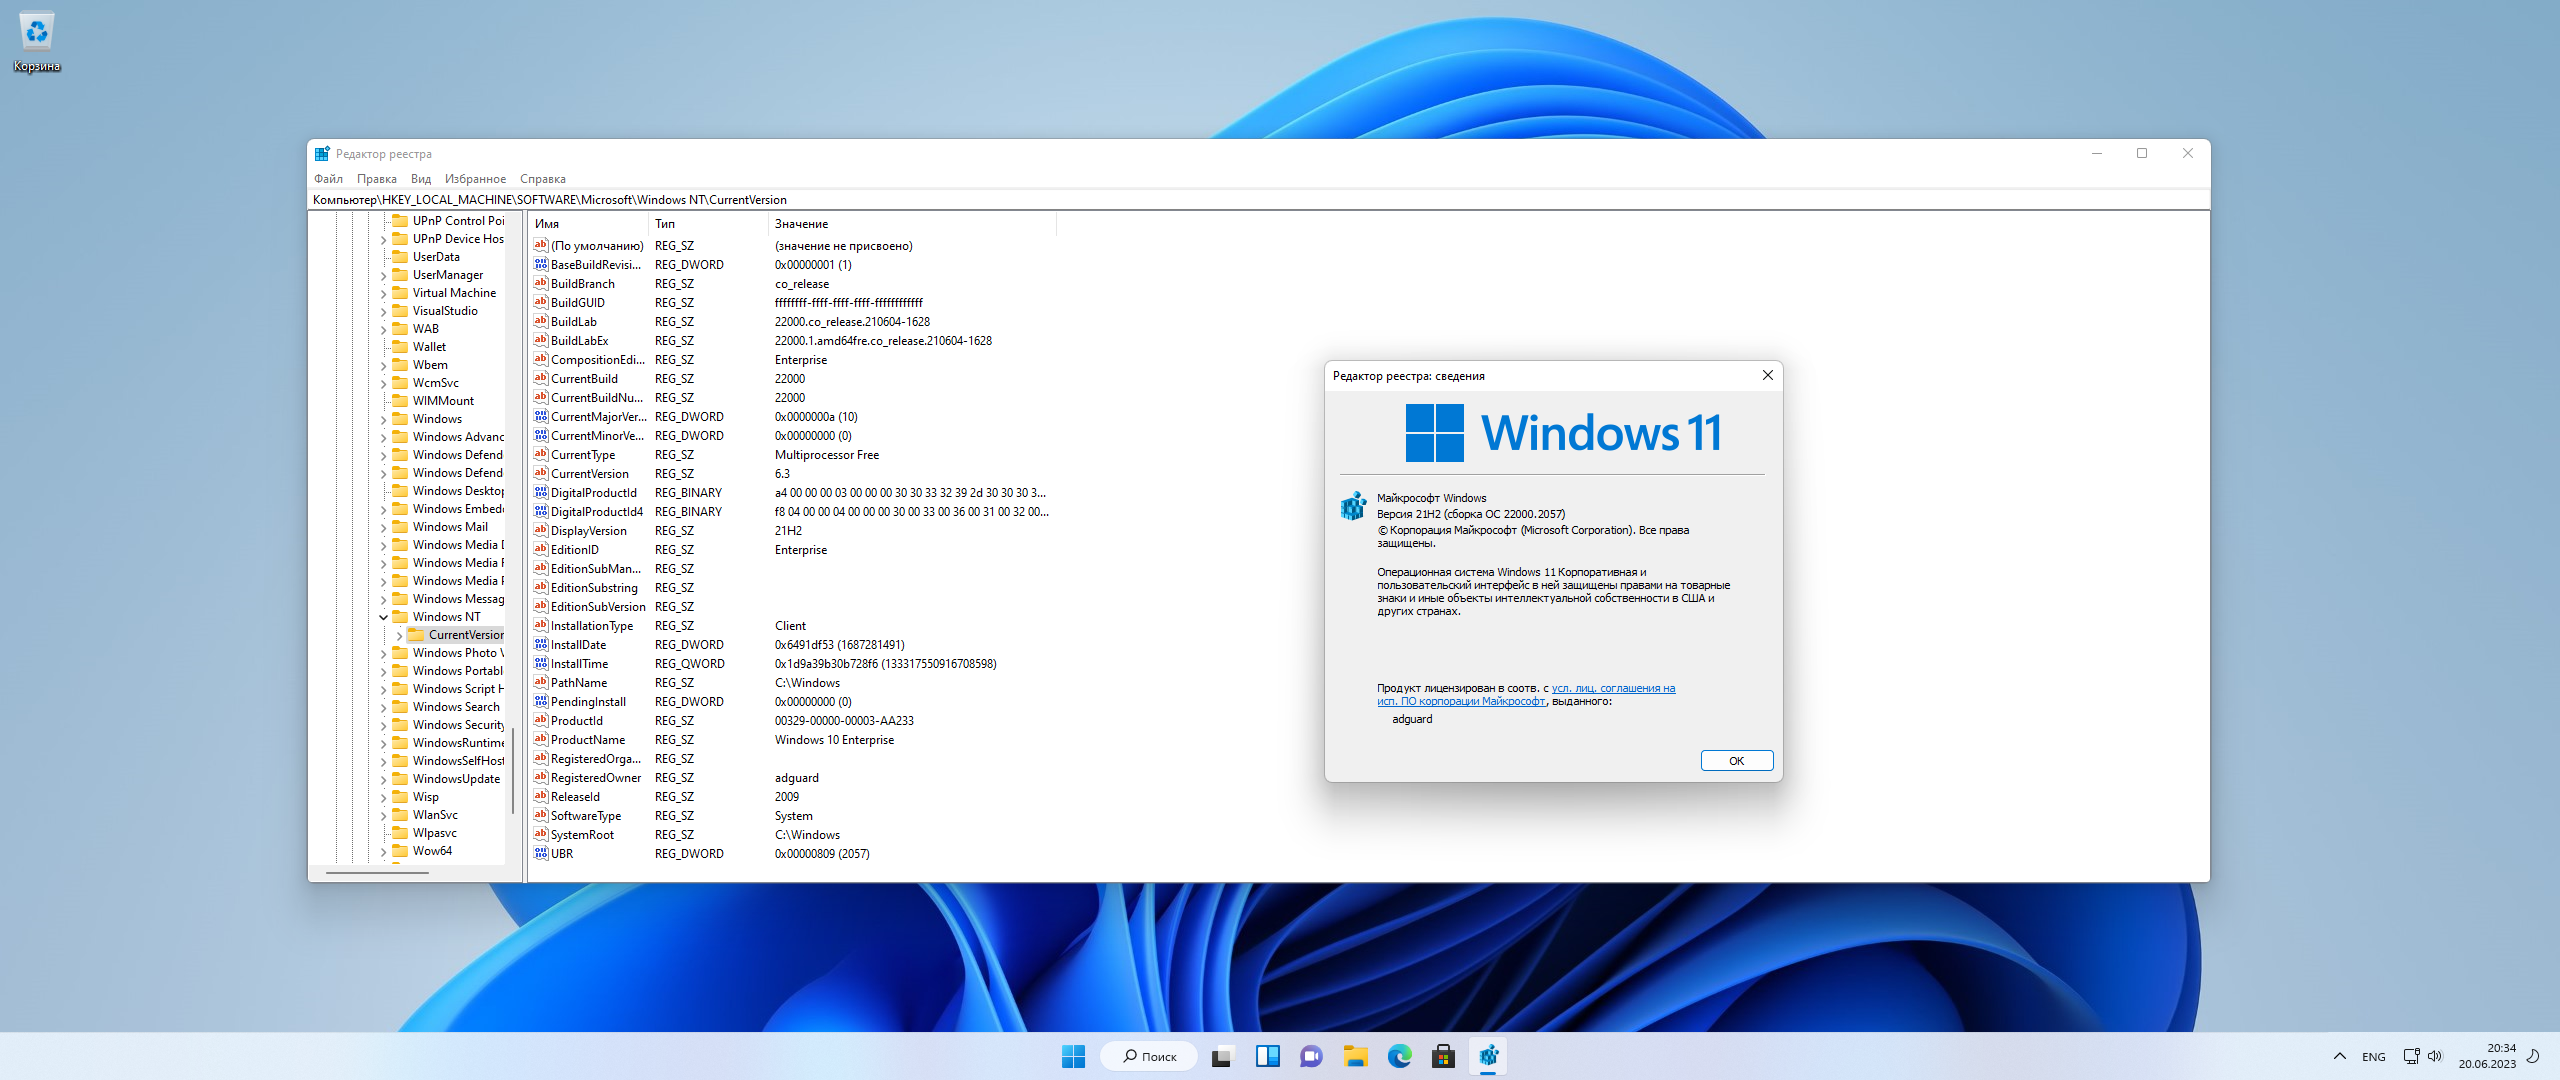 Microsoft Windows 11 [10.0.22000.2057], Version 21H2 (Updated June 2023) - Оригинальные образы от Microsoft MSDN [Ru]